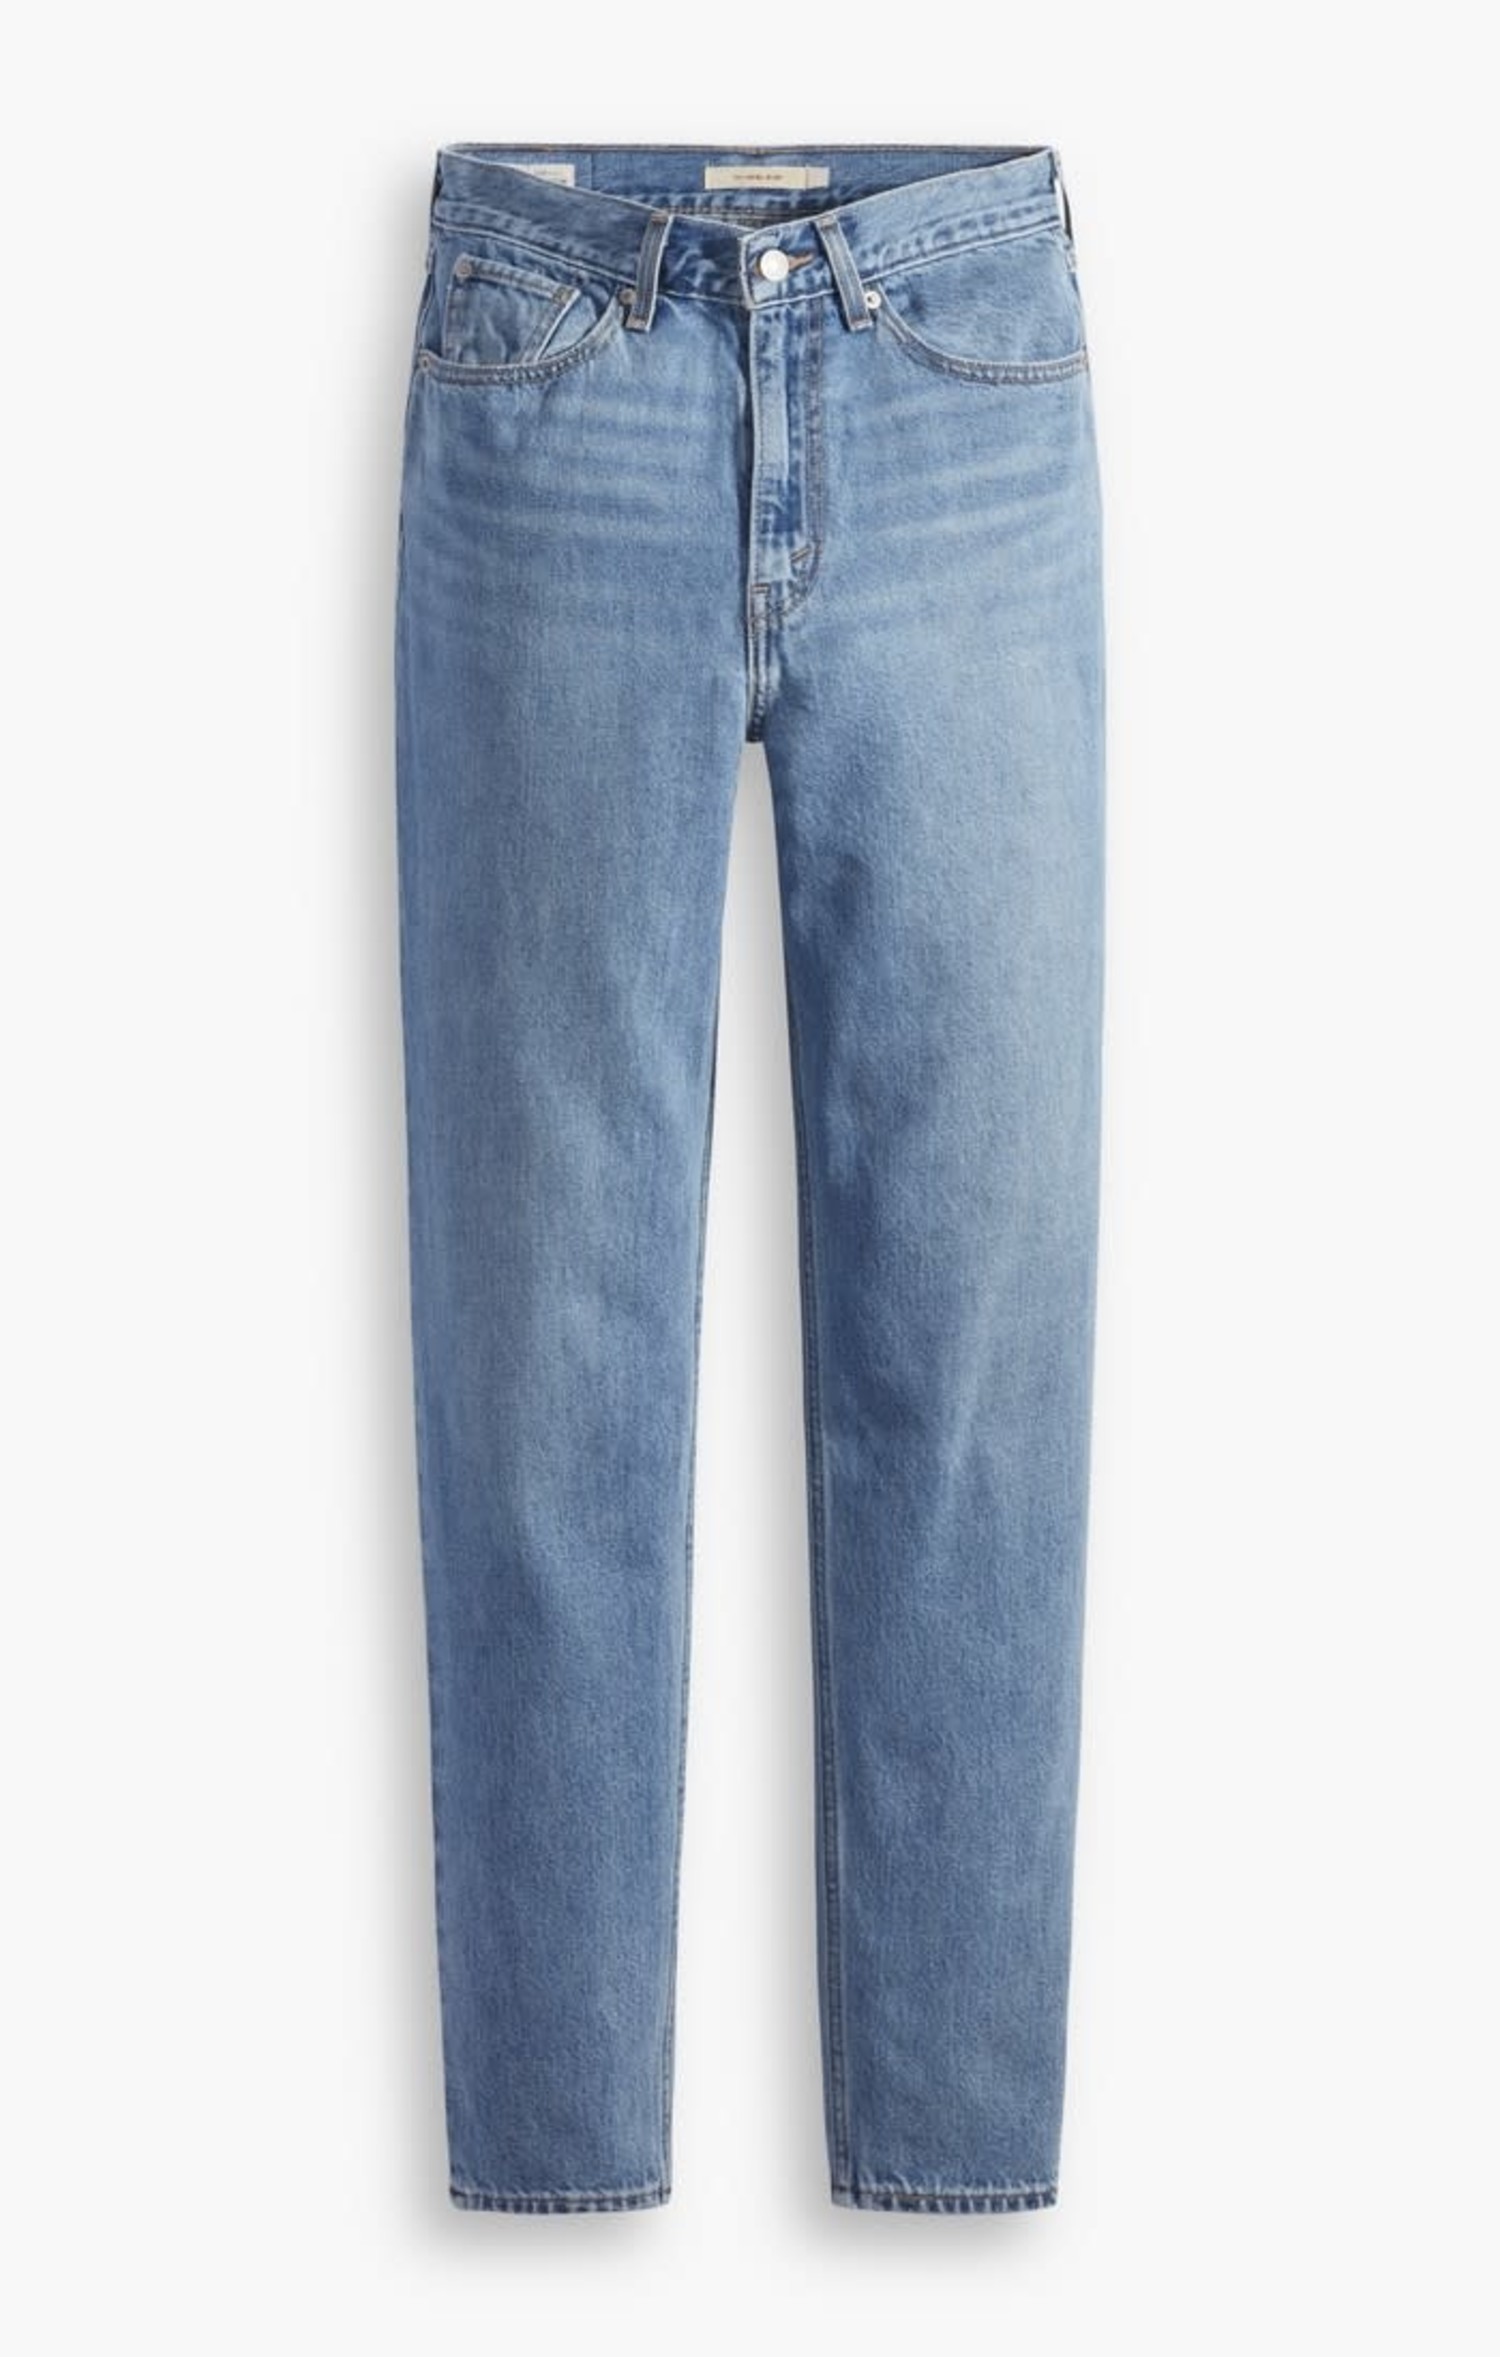 80s Mom Women's Jeans (plus Size) - Medium Wash